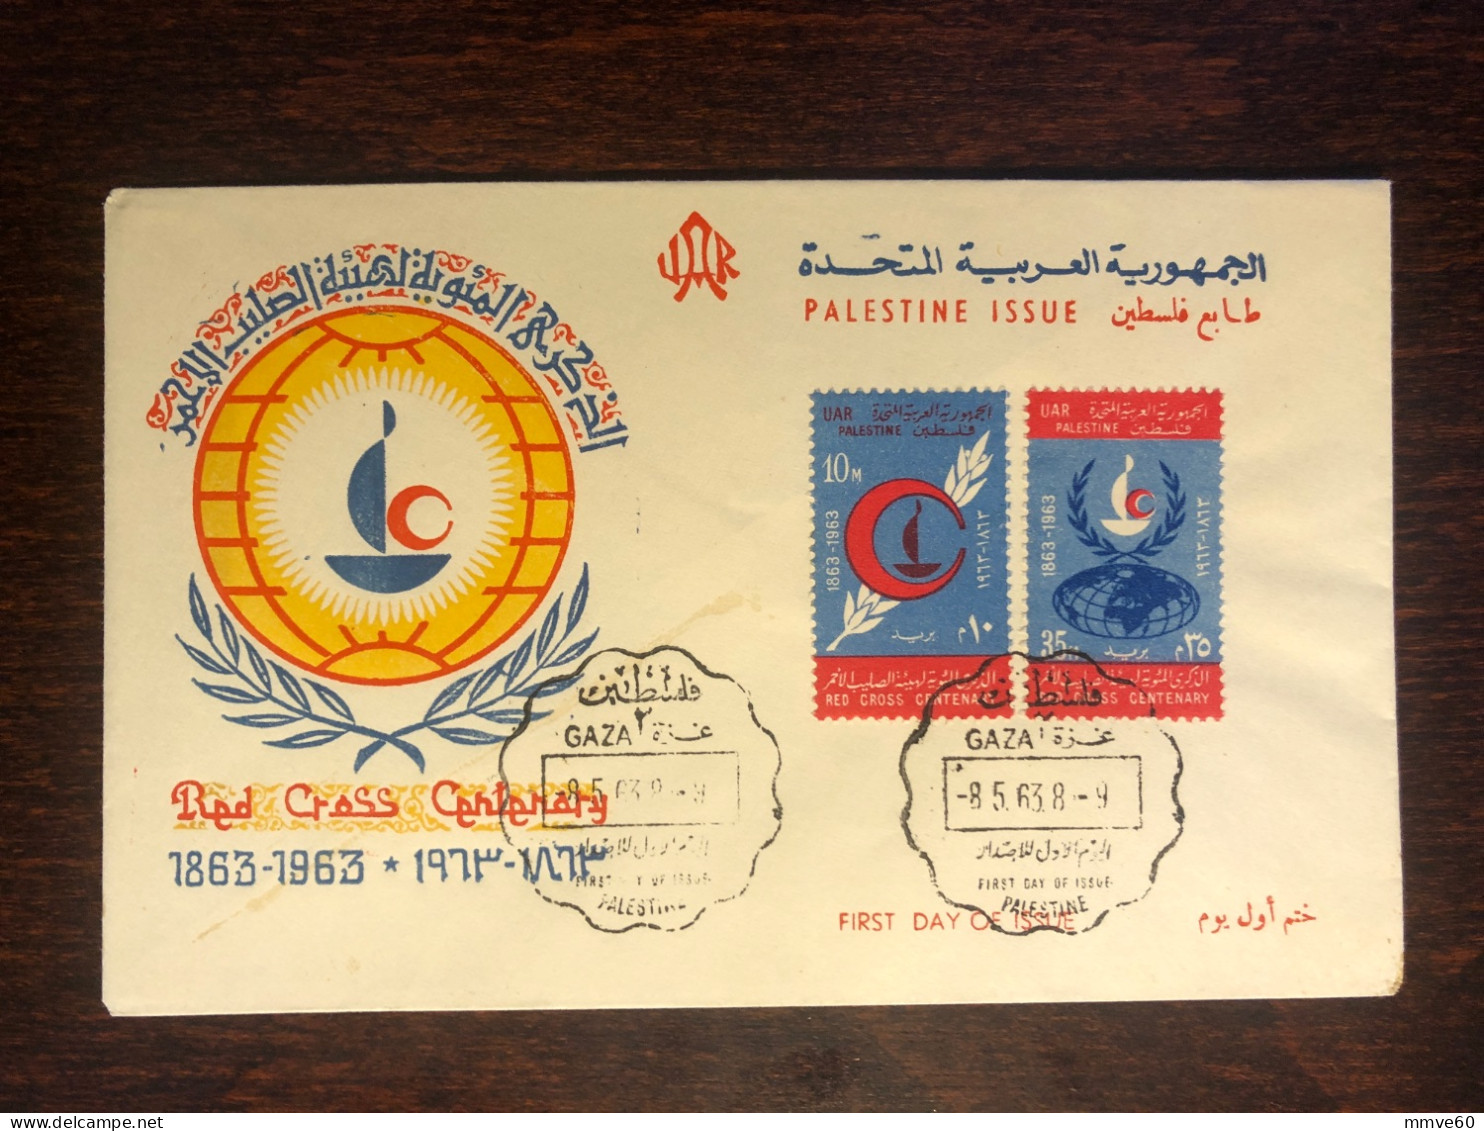 EGYPT UAR PALESTINE GAZA FDC COVER 1963 YEAR  RED CROSS HEALTH MEDICINE STAMPS - Storia Postale